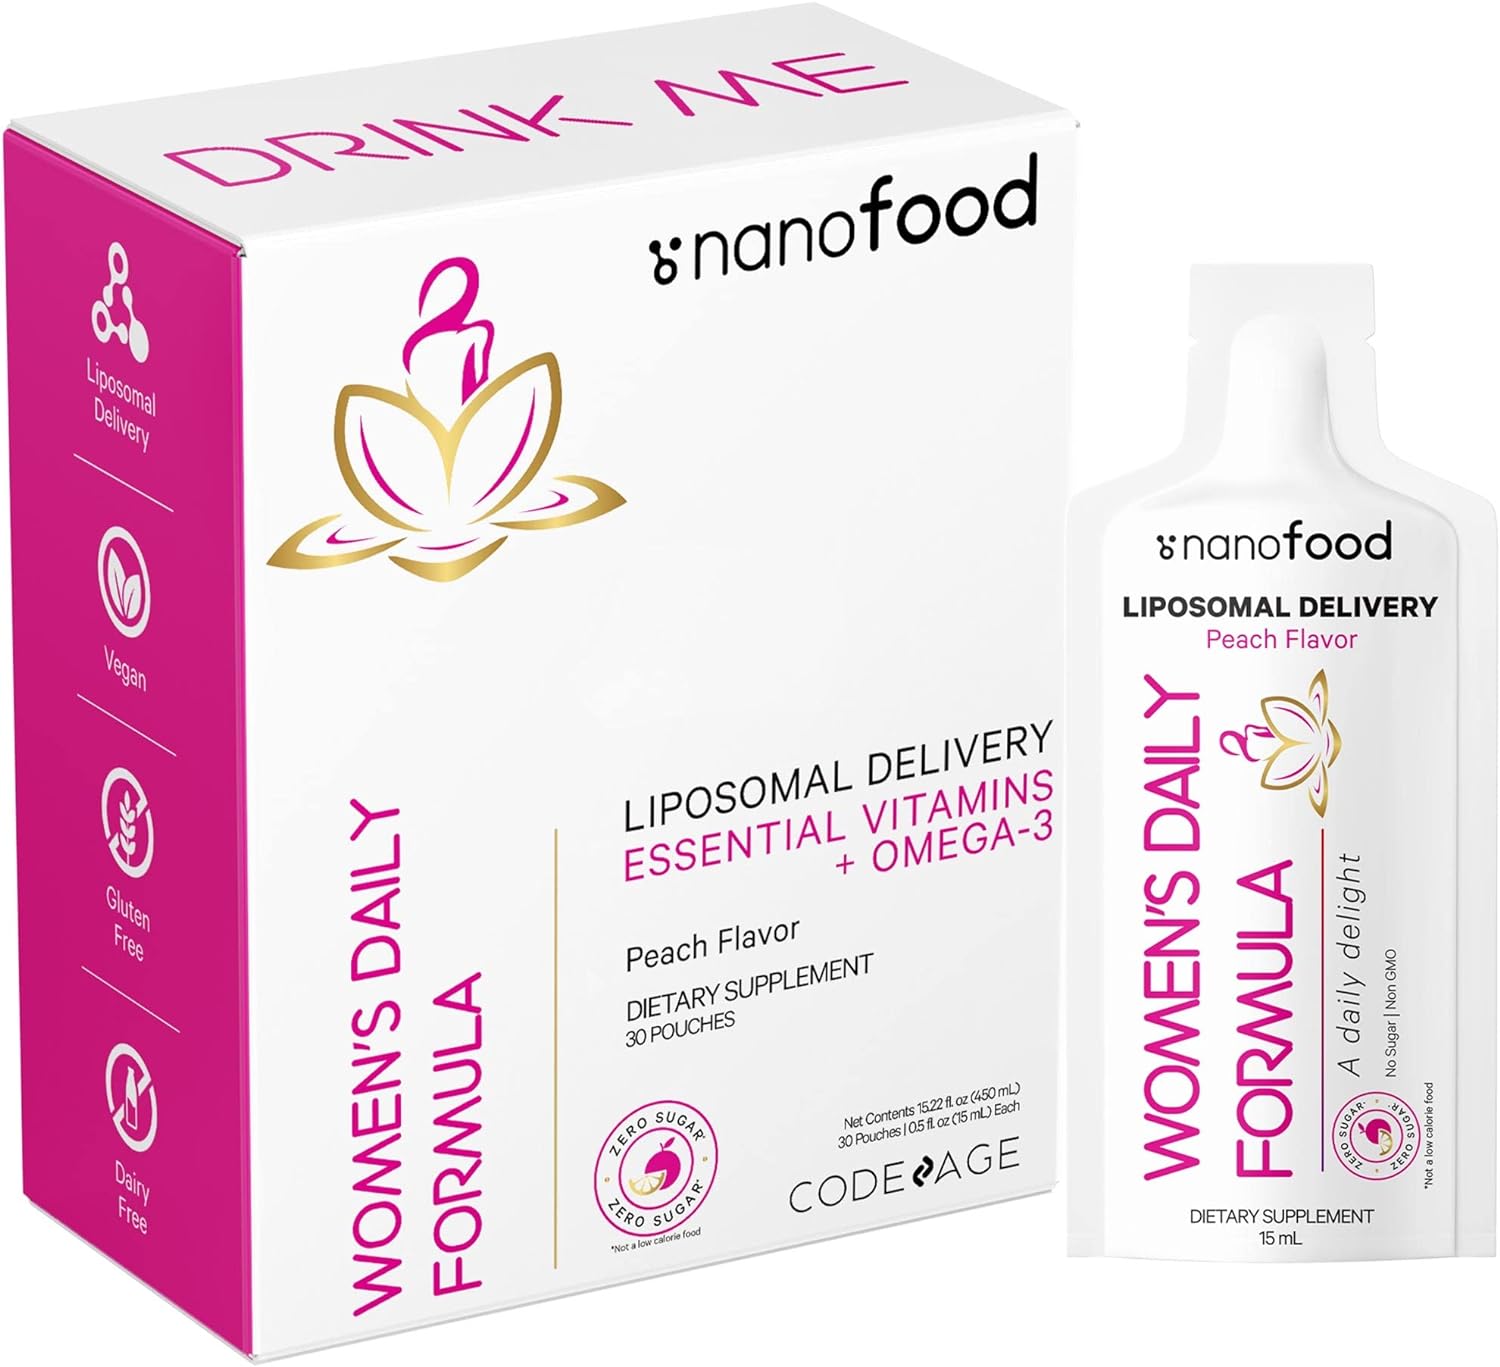 Codeage Liposomal Women's Daily Vitamins Liquid Pouch Formula, Vegan O